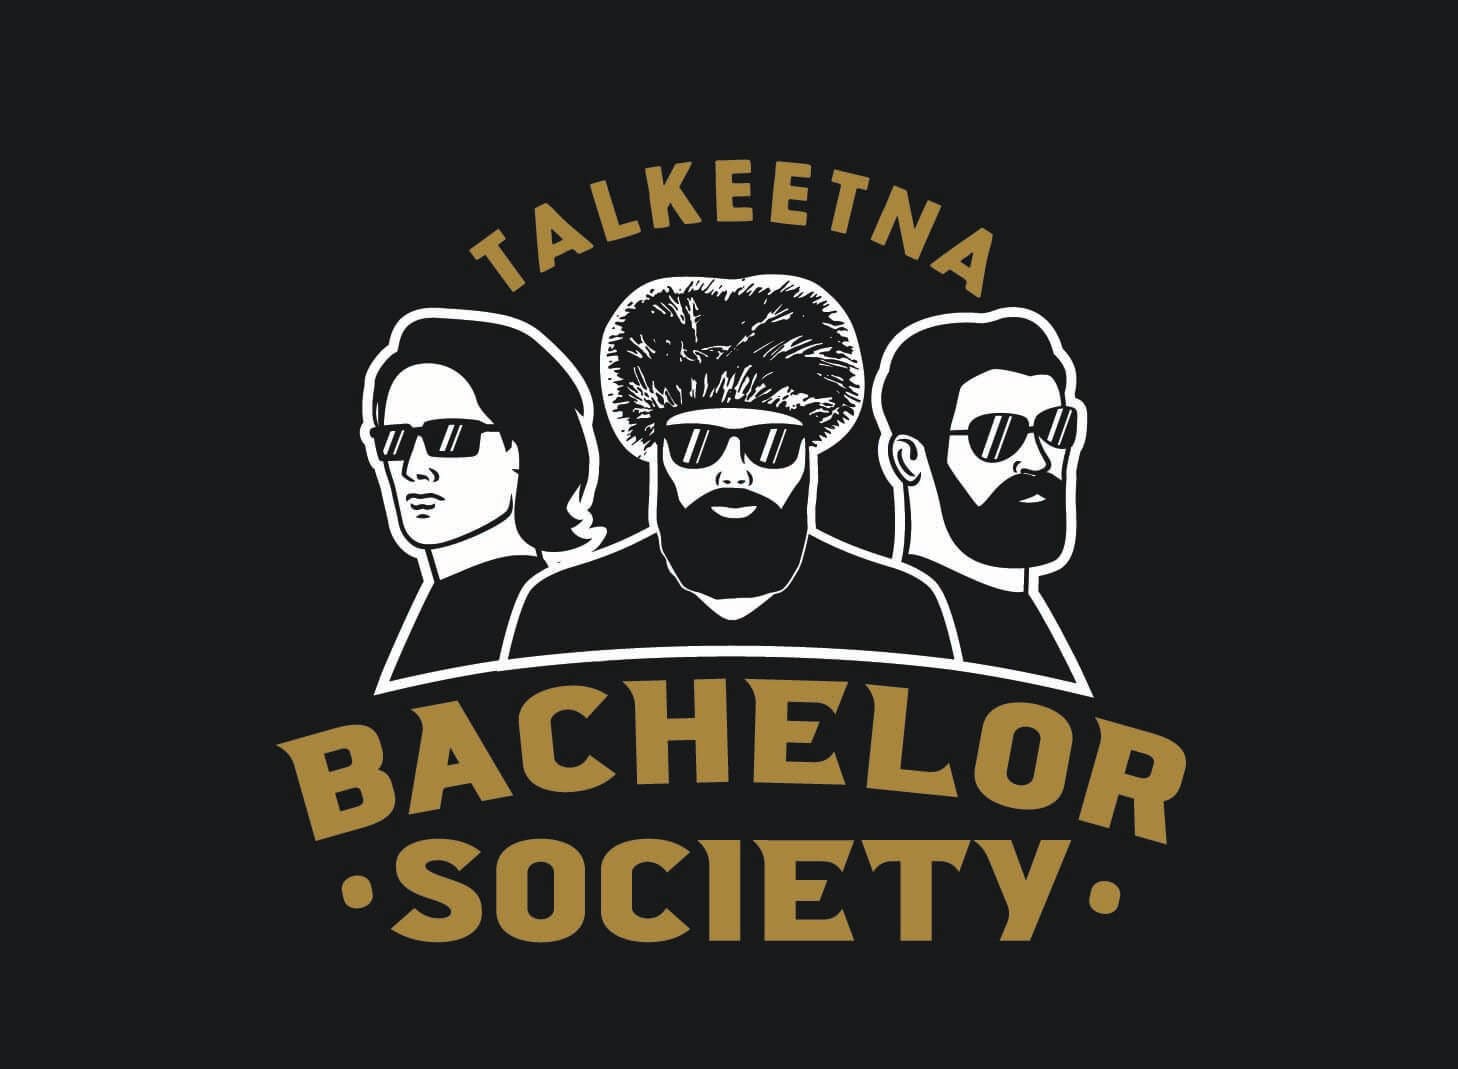 Talkeetna Bachelor Society